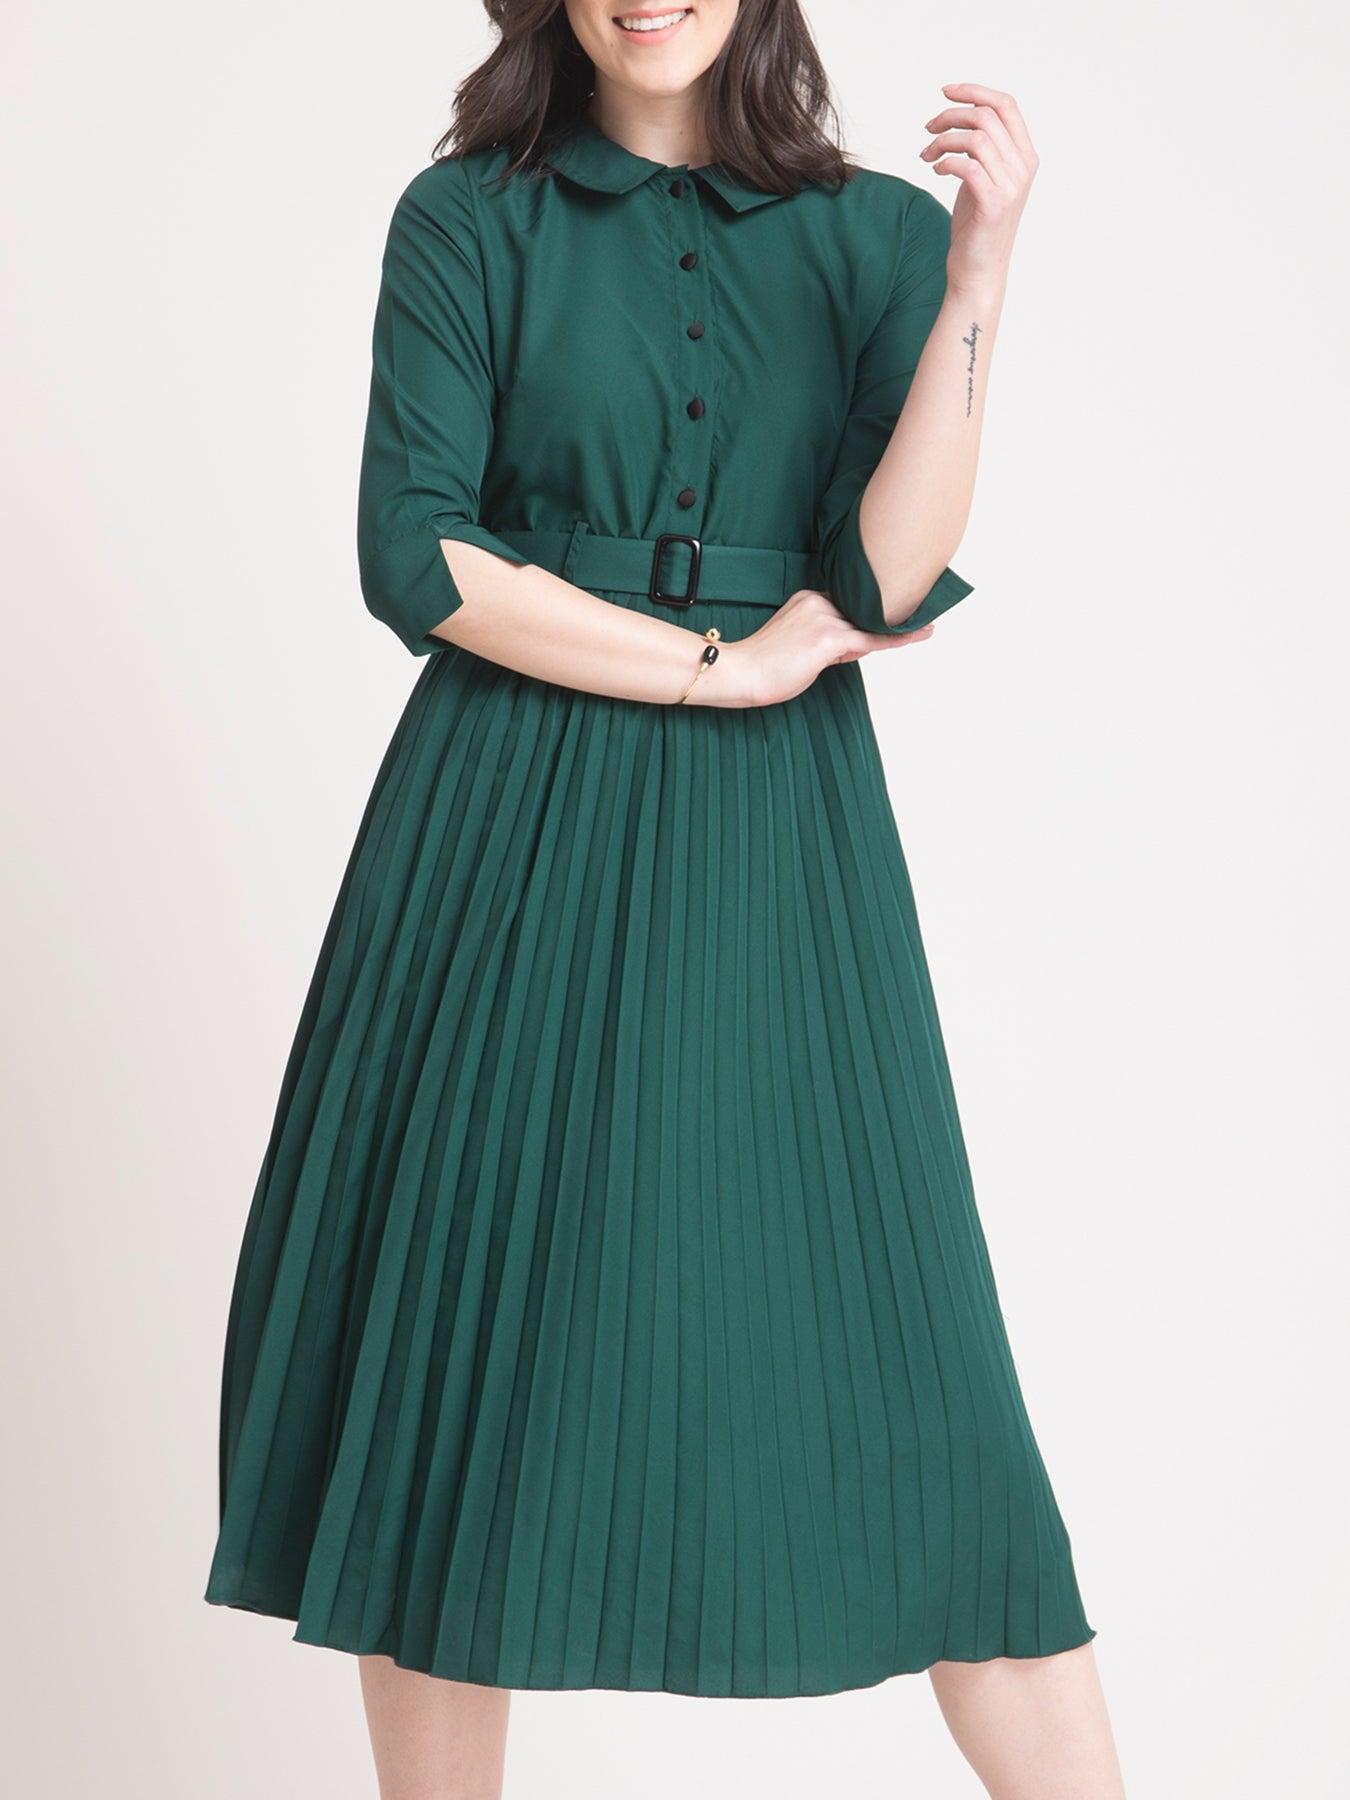 Peter Pan Collar Pleated A Line Dress - Green| Formal Dresses